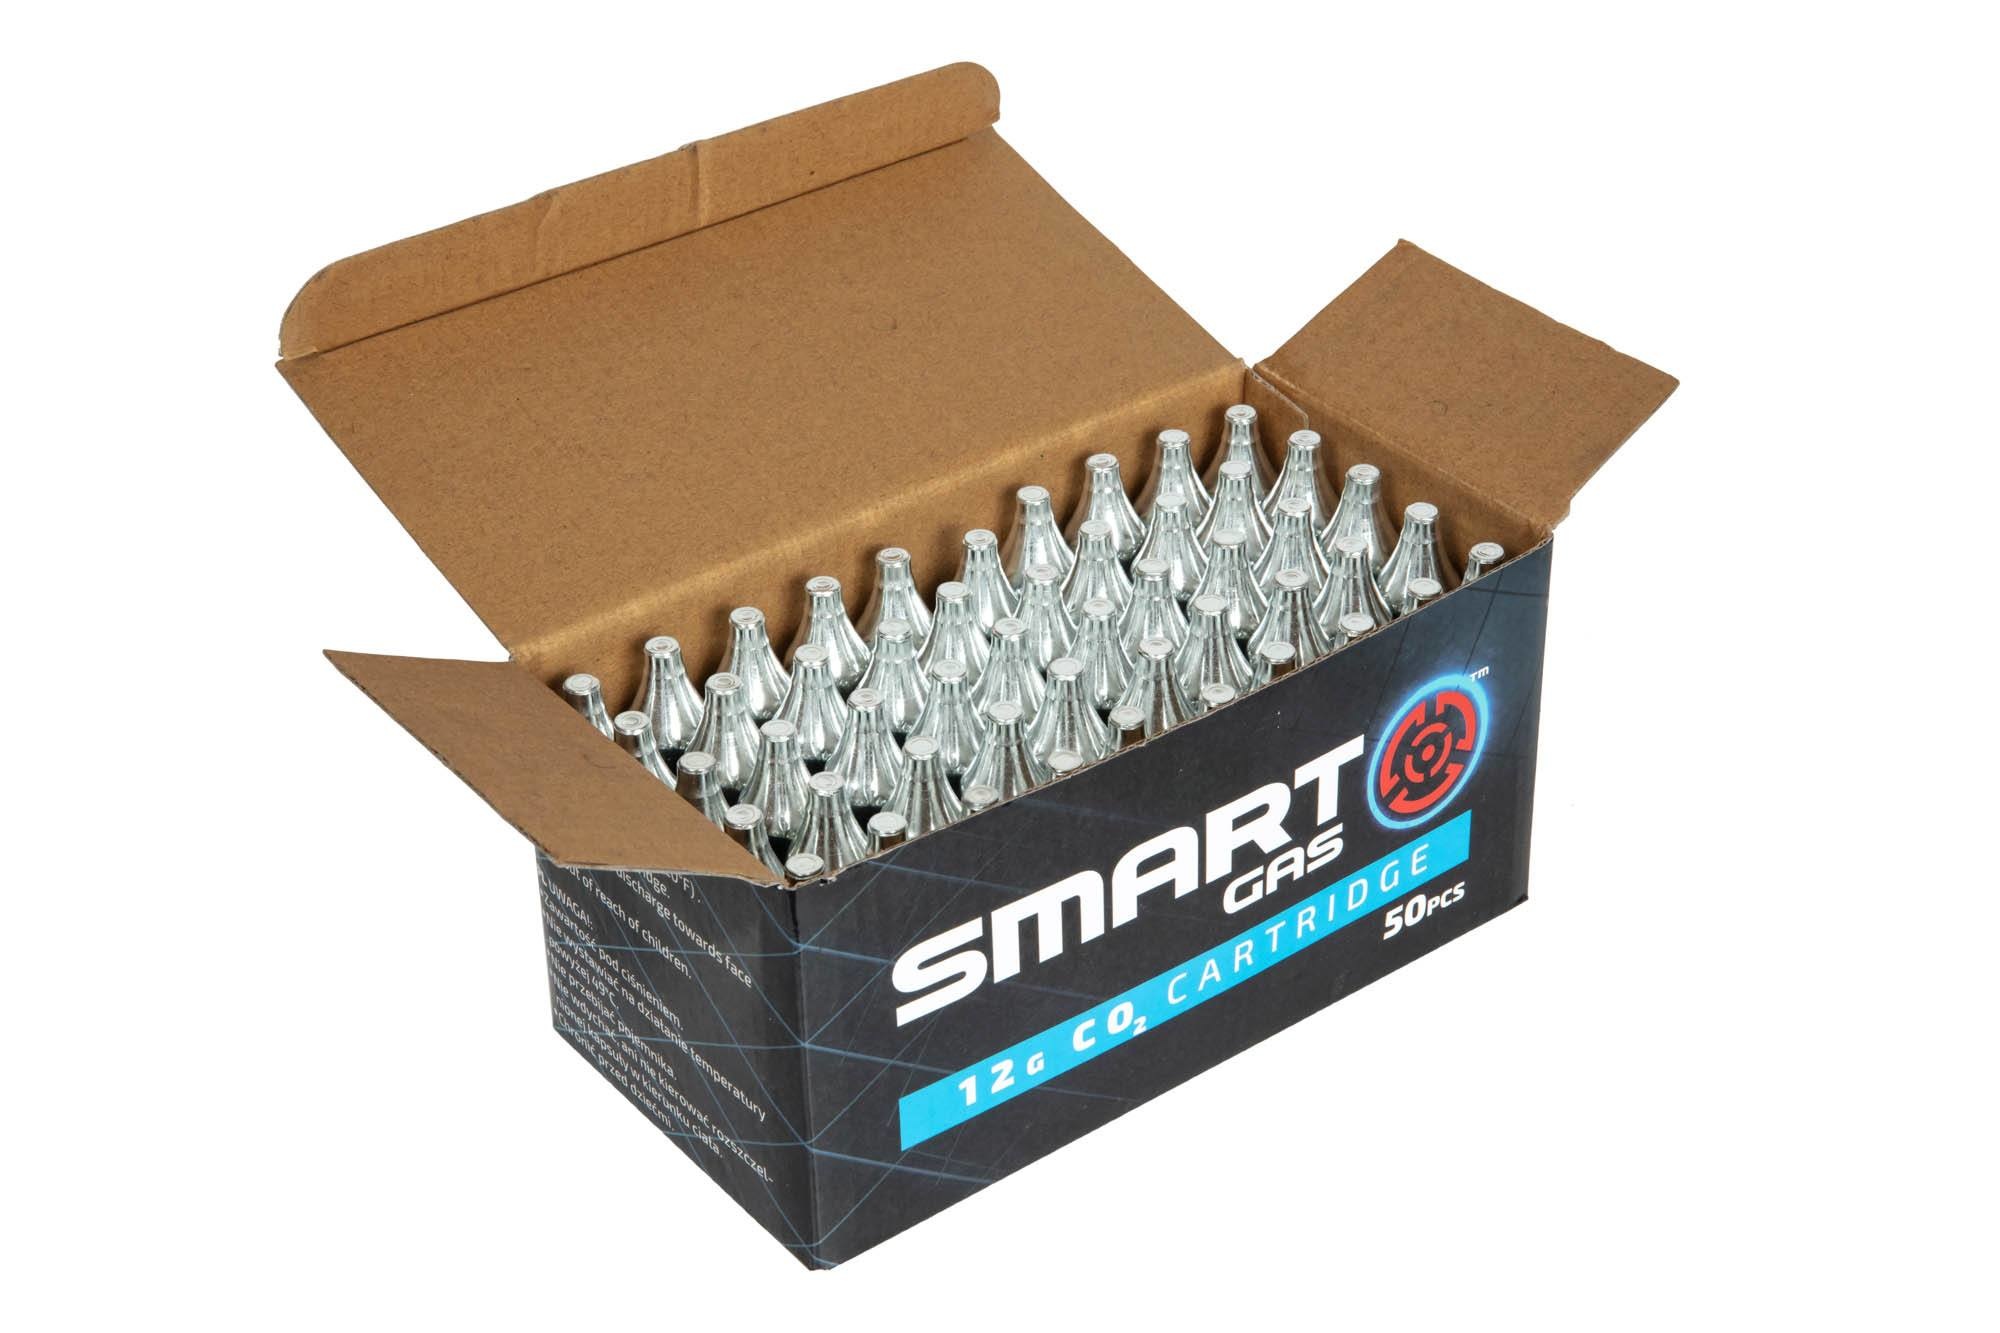 Smart Gas Cápsula de Co2 - 12 gramas - 50 peças